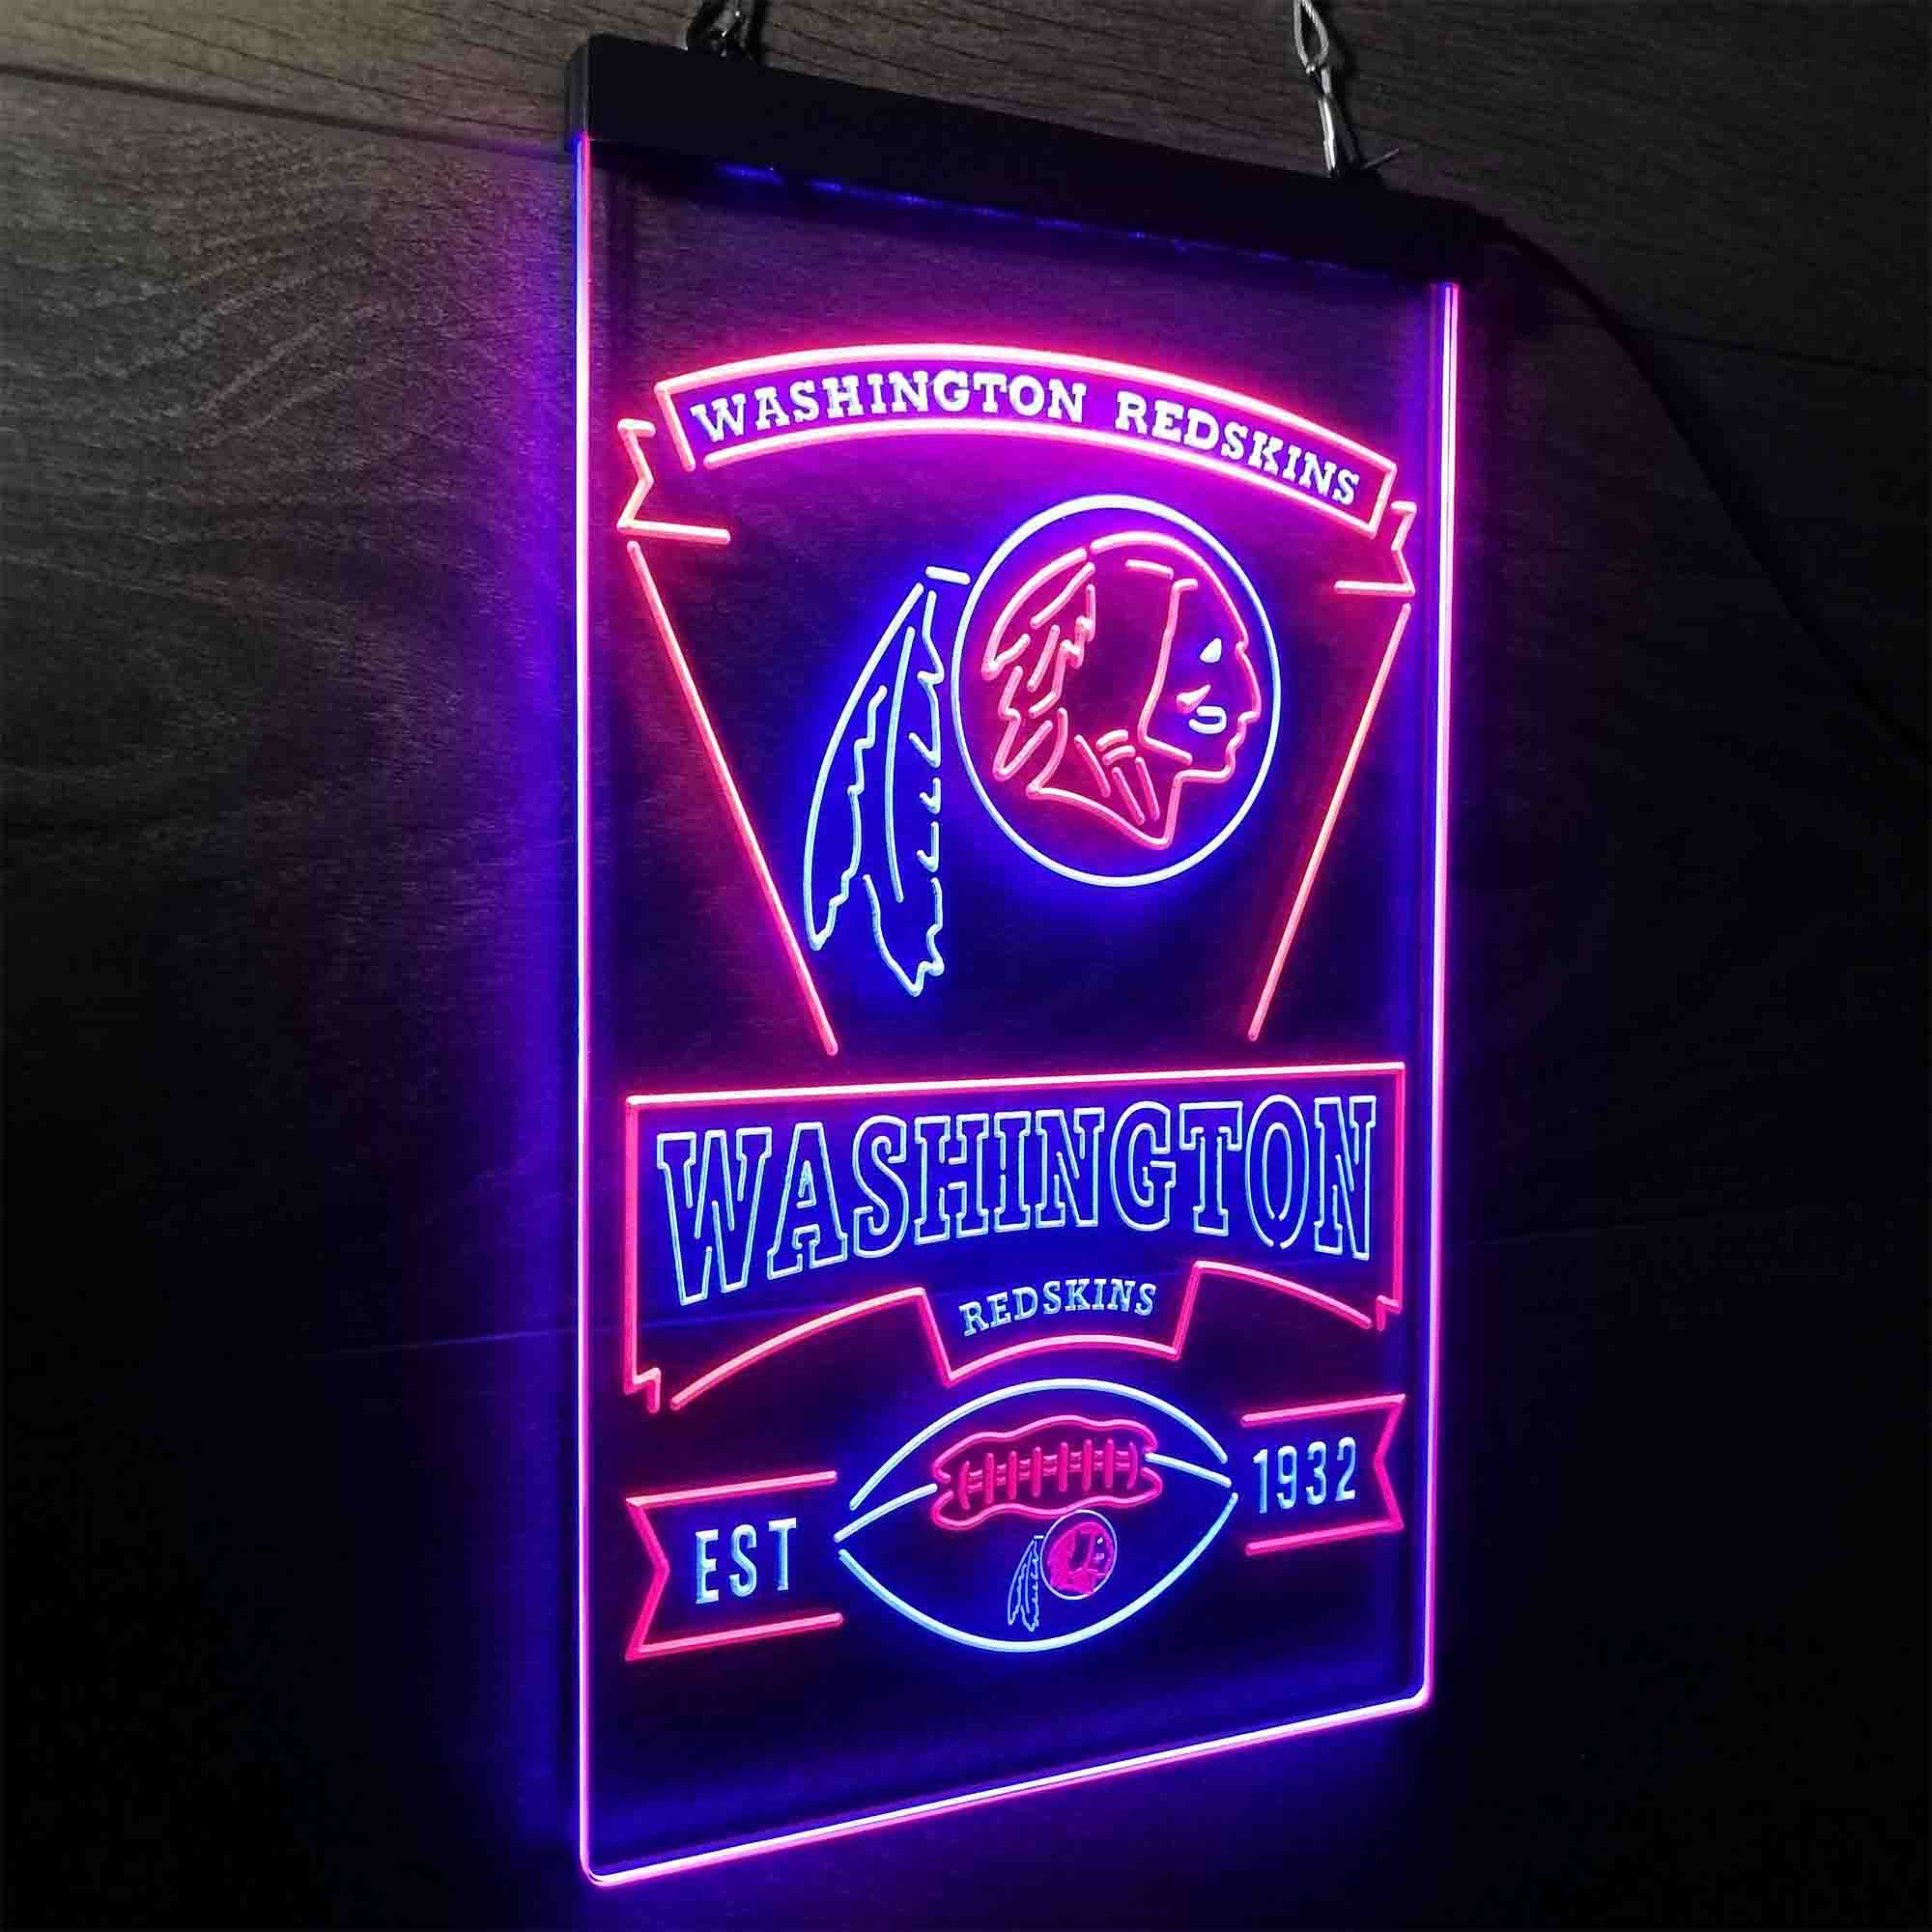 Washington Redskins Est. 1932 LED Neon Sign